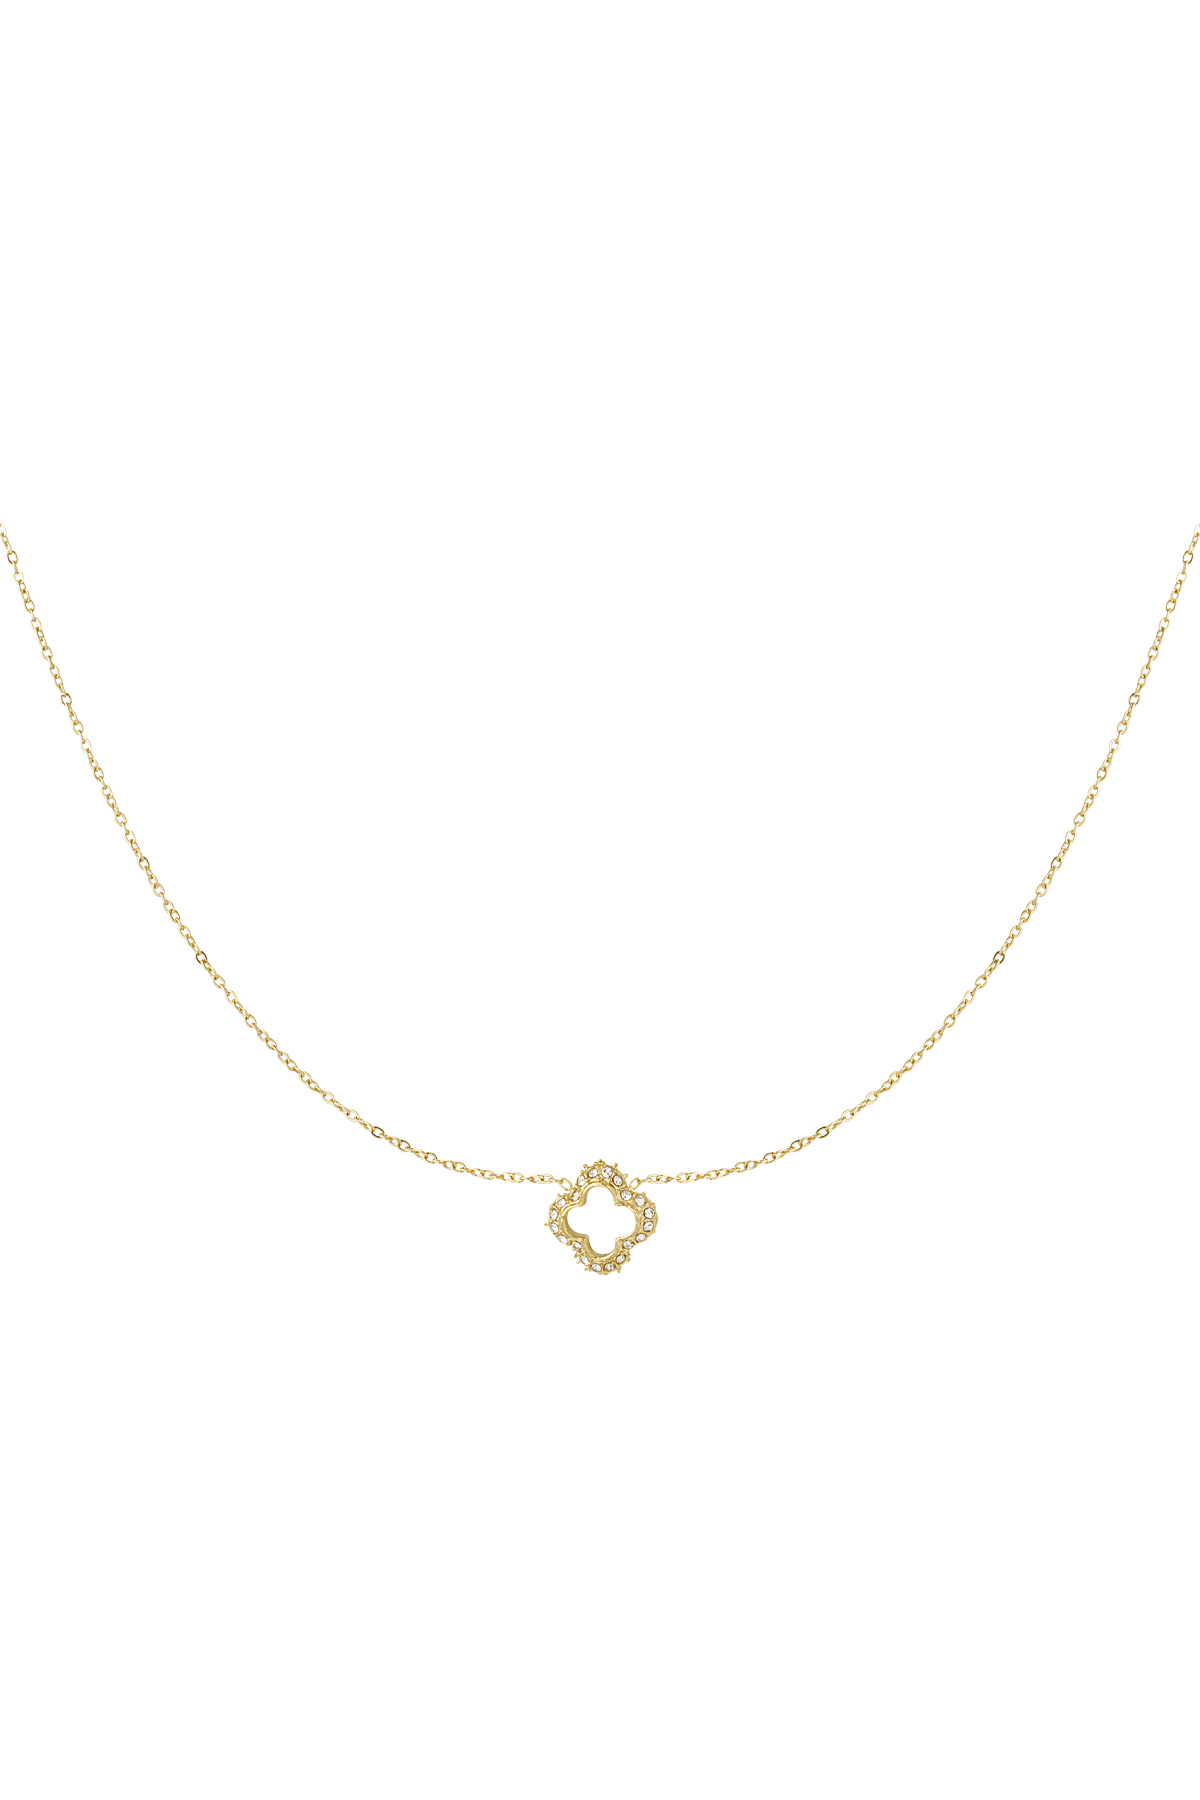 Diamond clover necklace - gold 